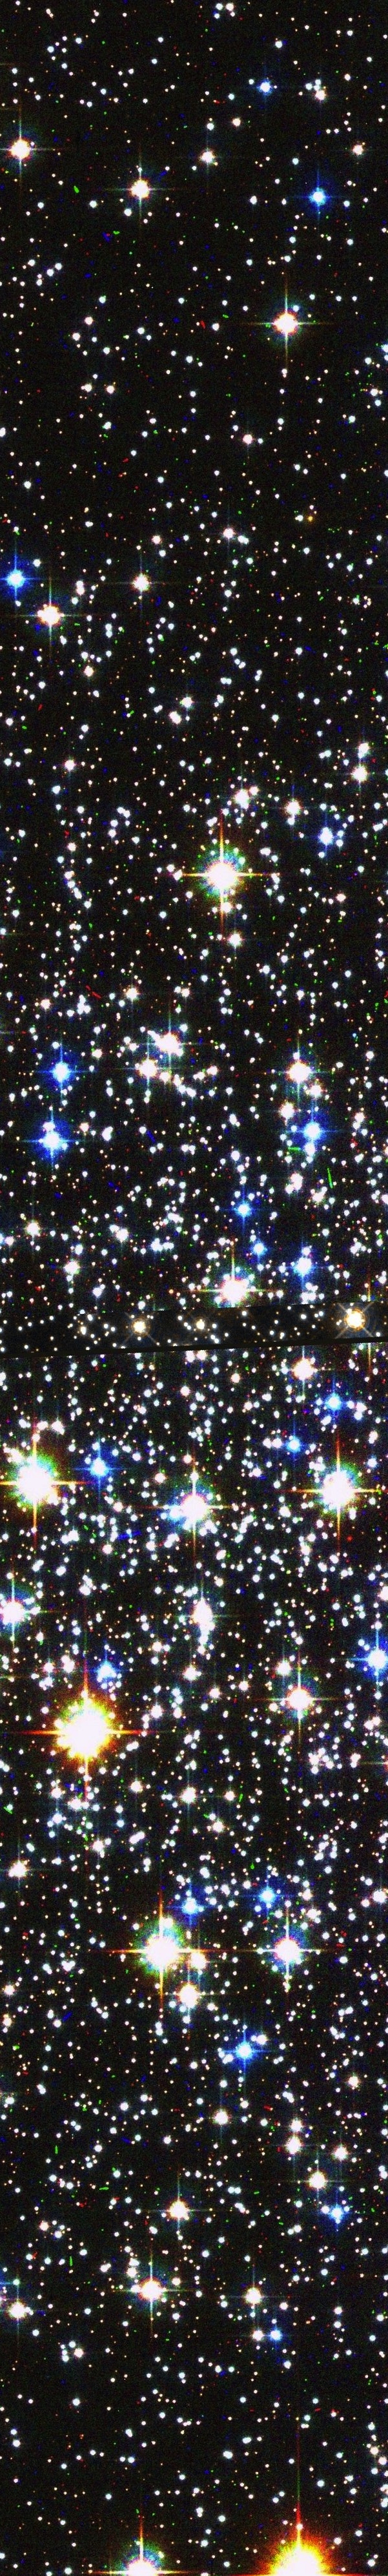 Image credit: NASA / ESA / STScI / Hubble Space Telescope.